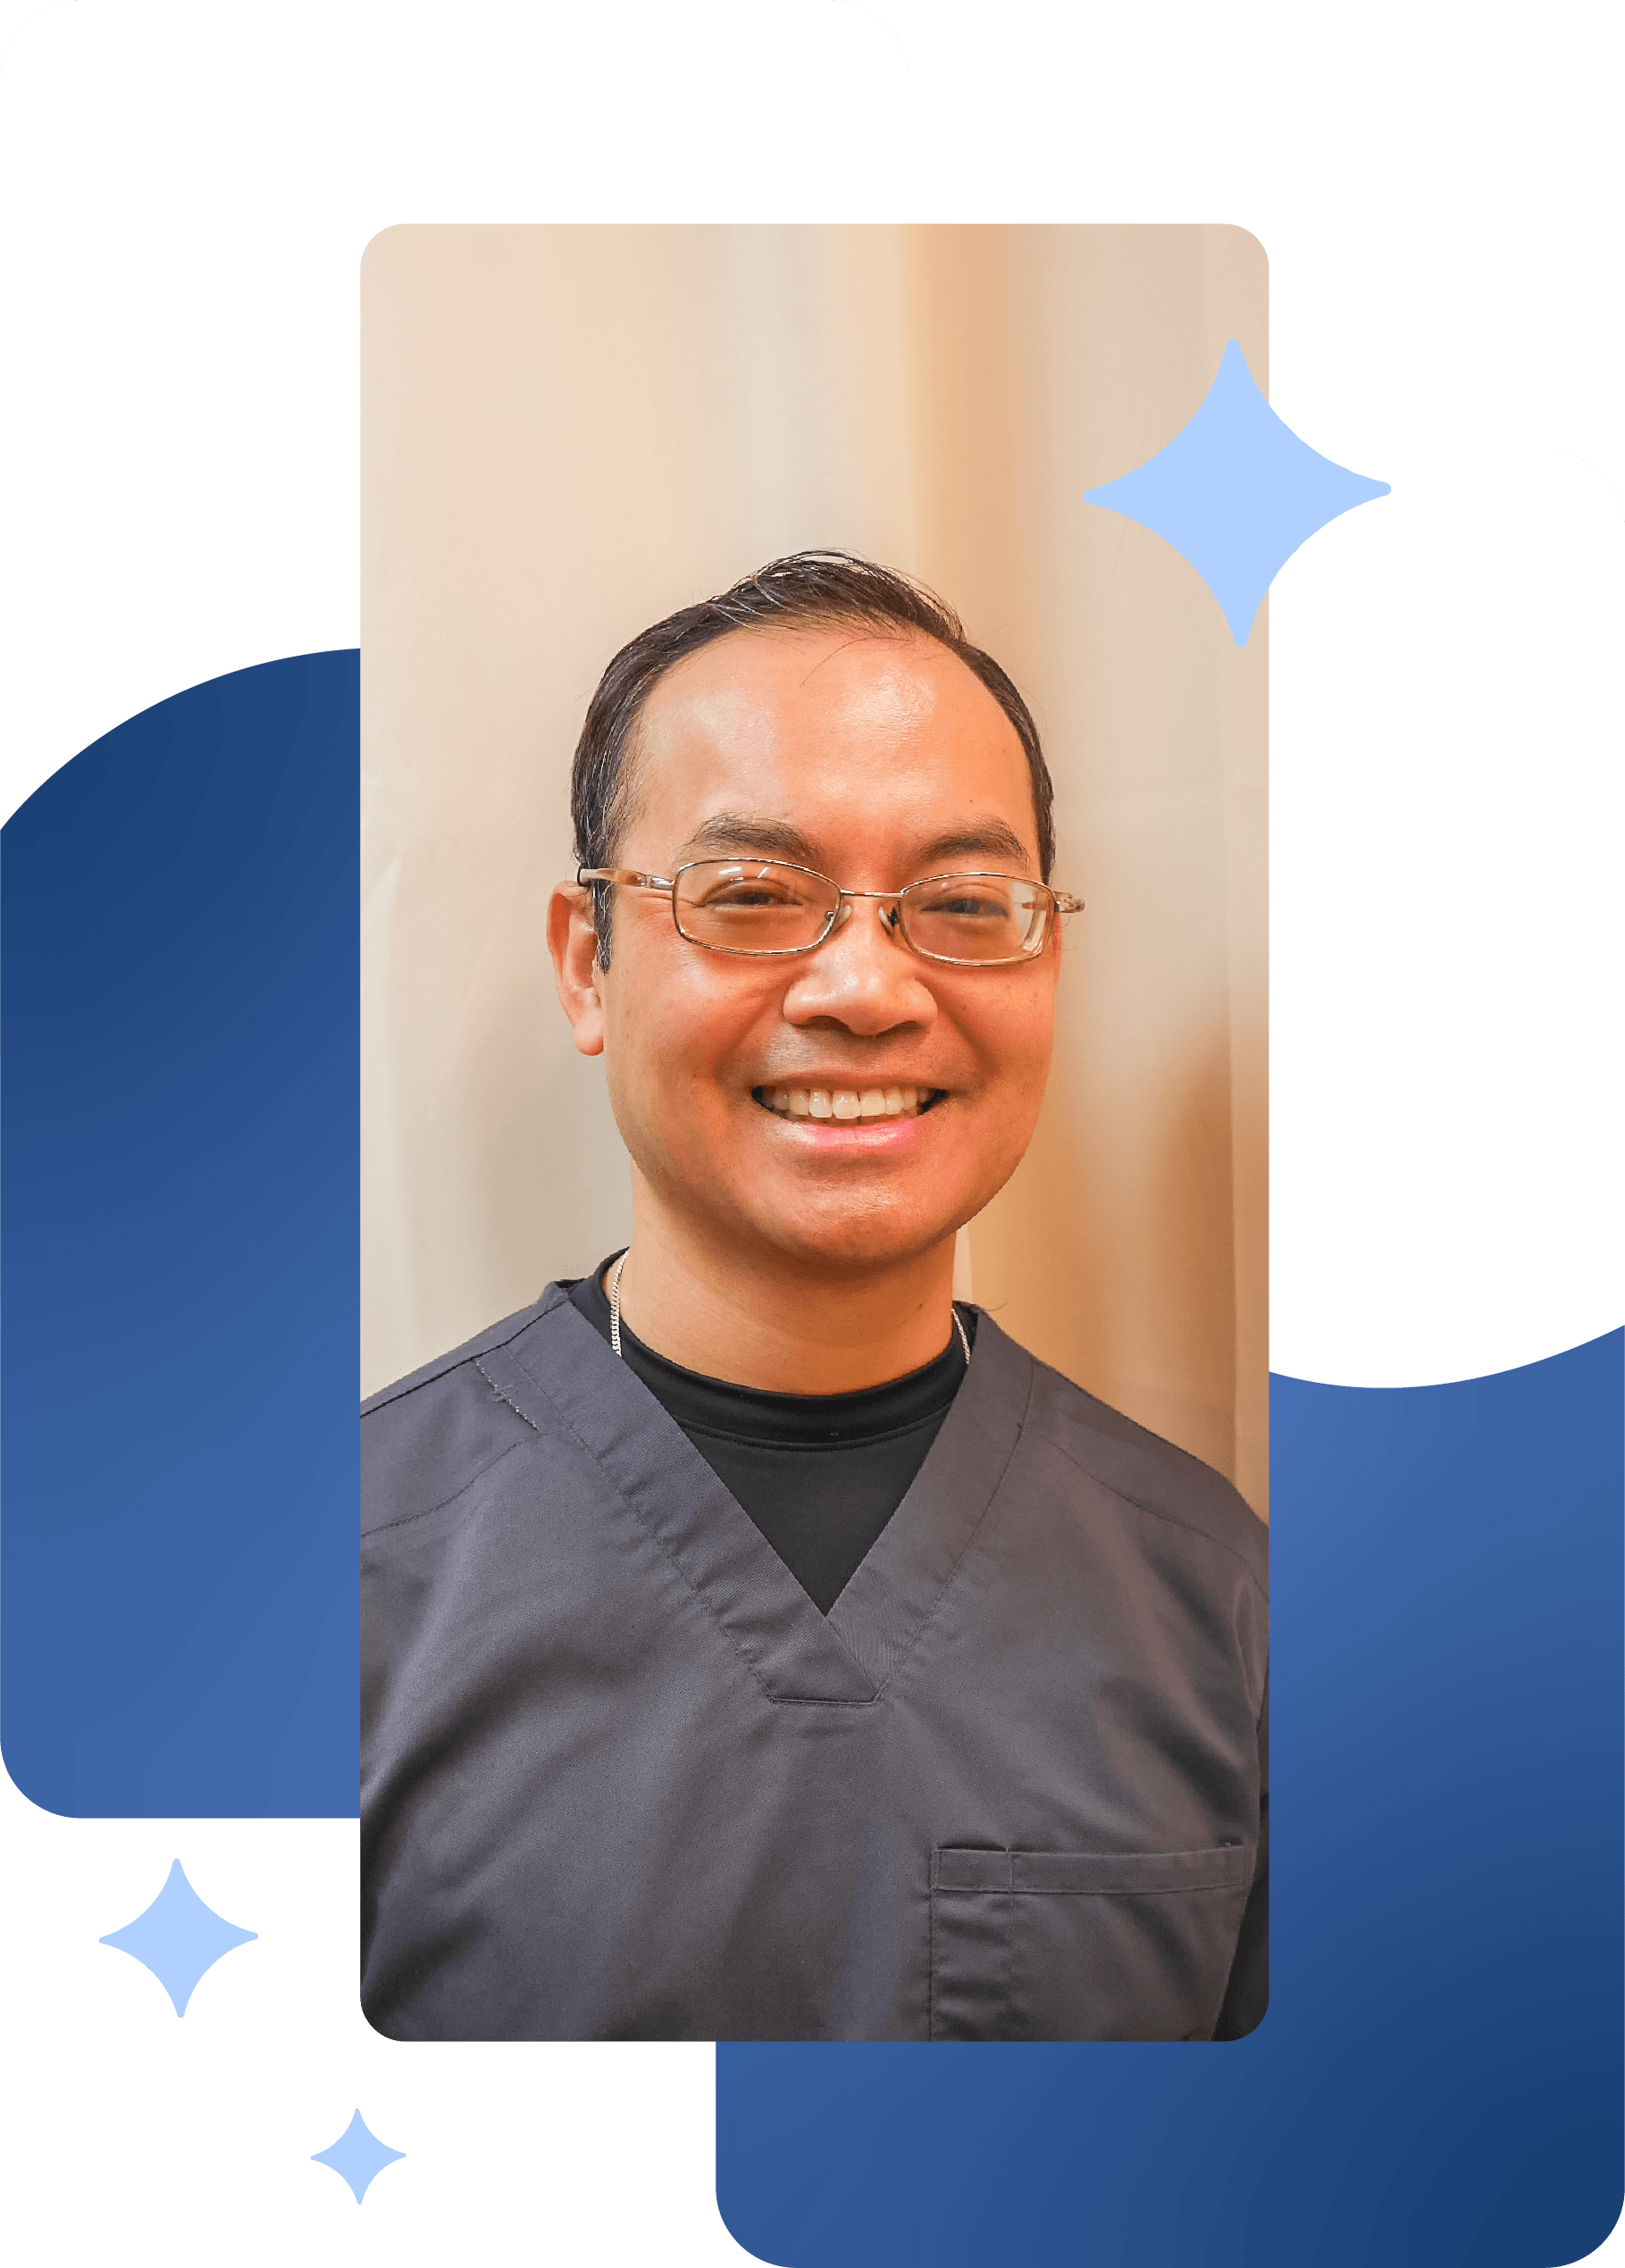 Meet Dr. Quynh - General Dentistry